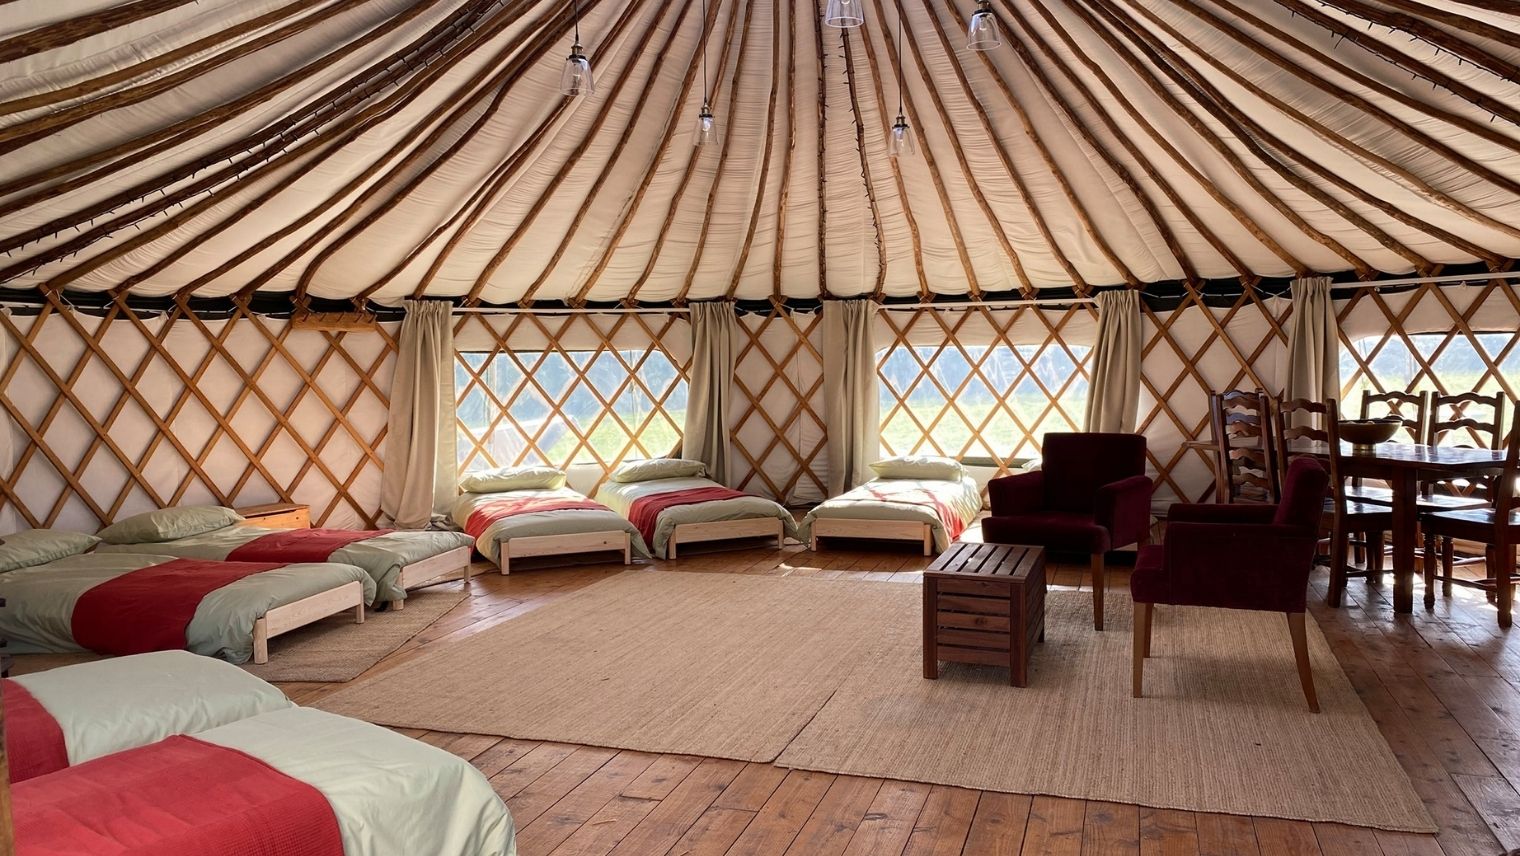 Interior of a yurt at Night Pastures campsite